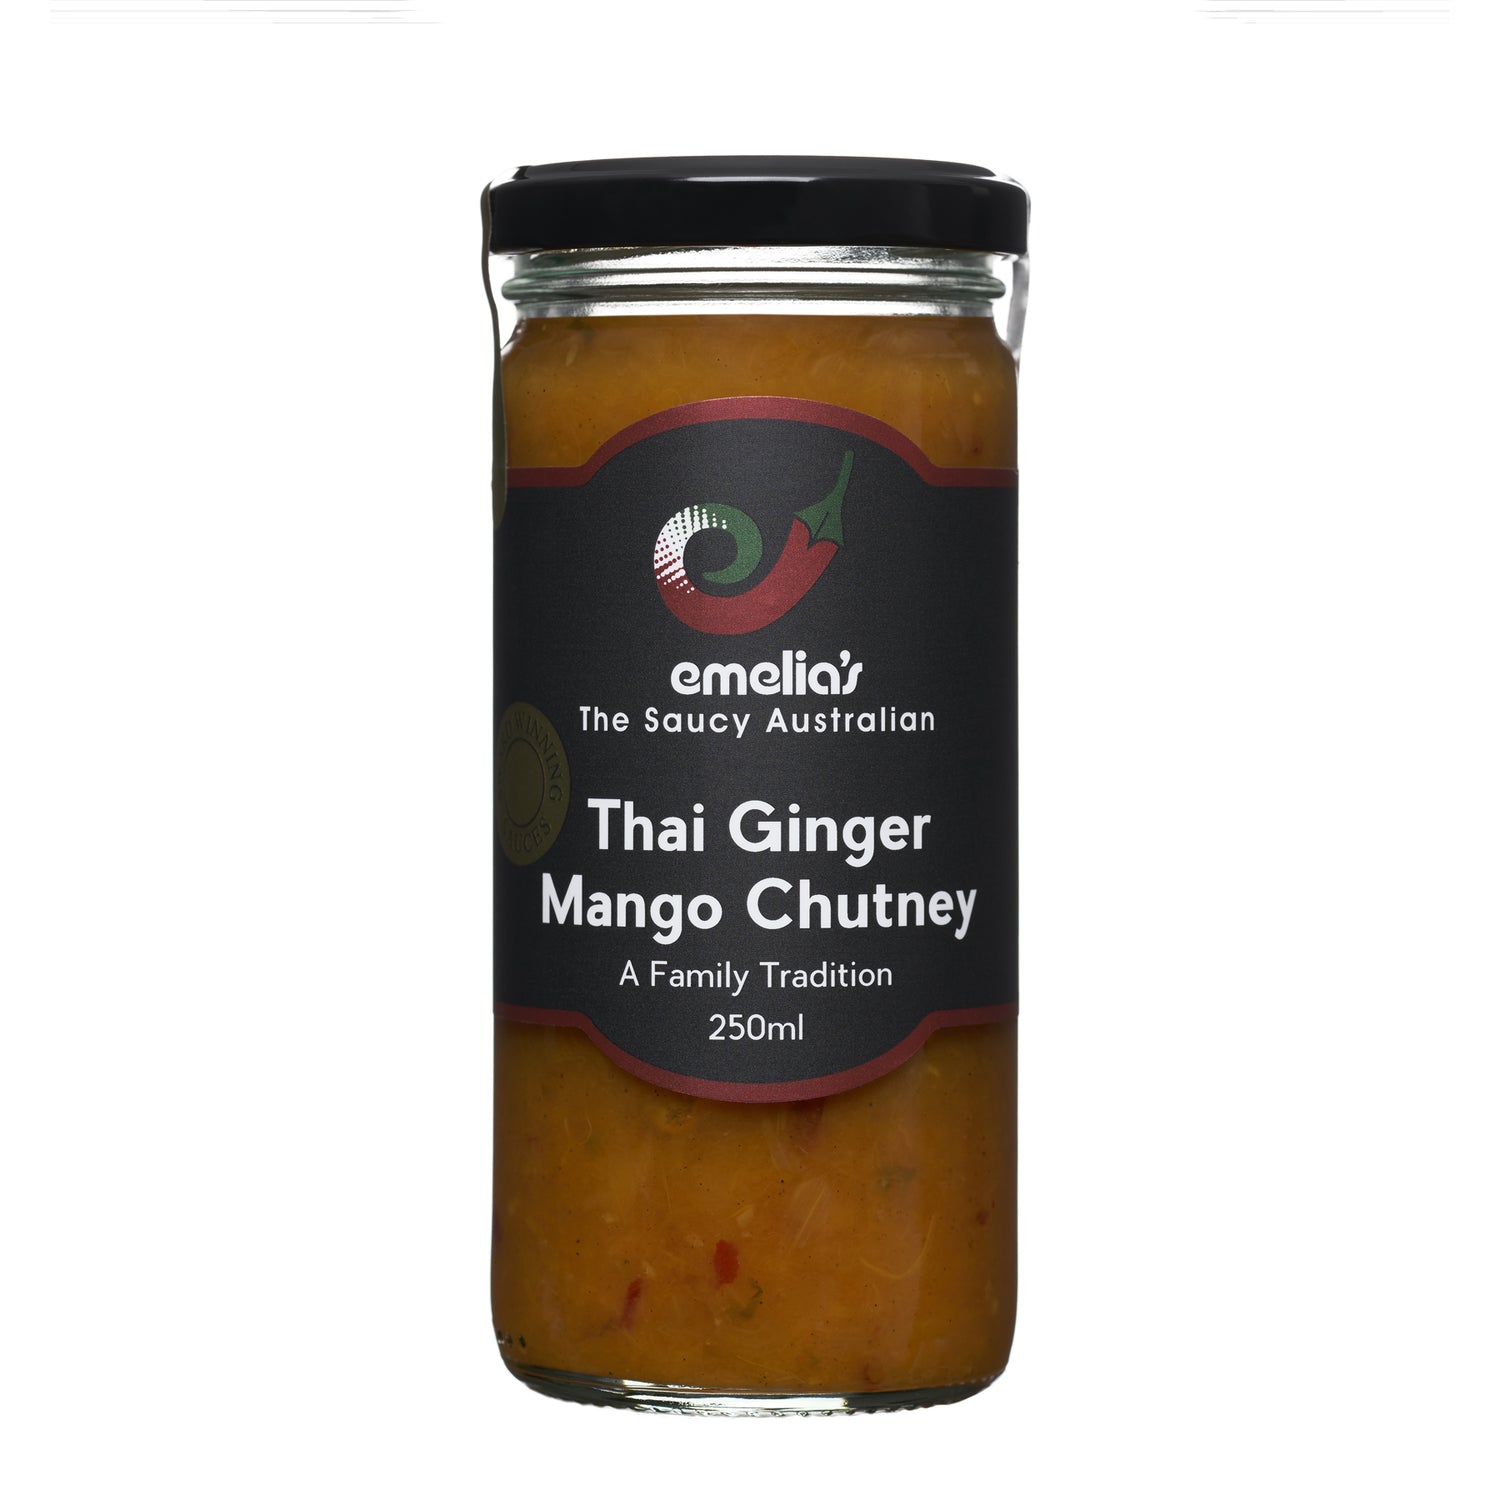 Thai ginger mango chutney